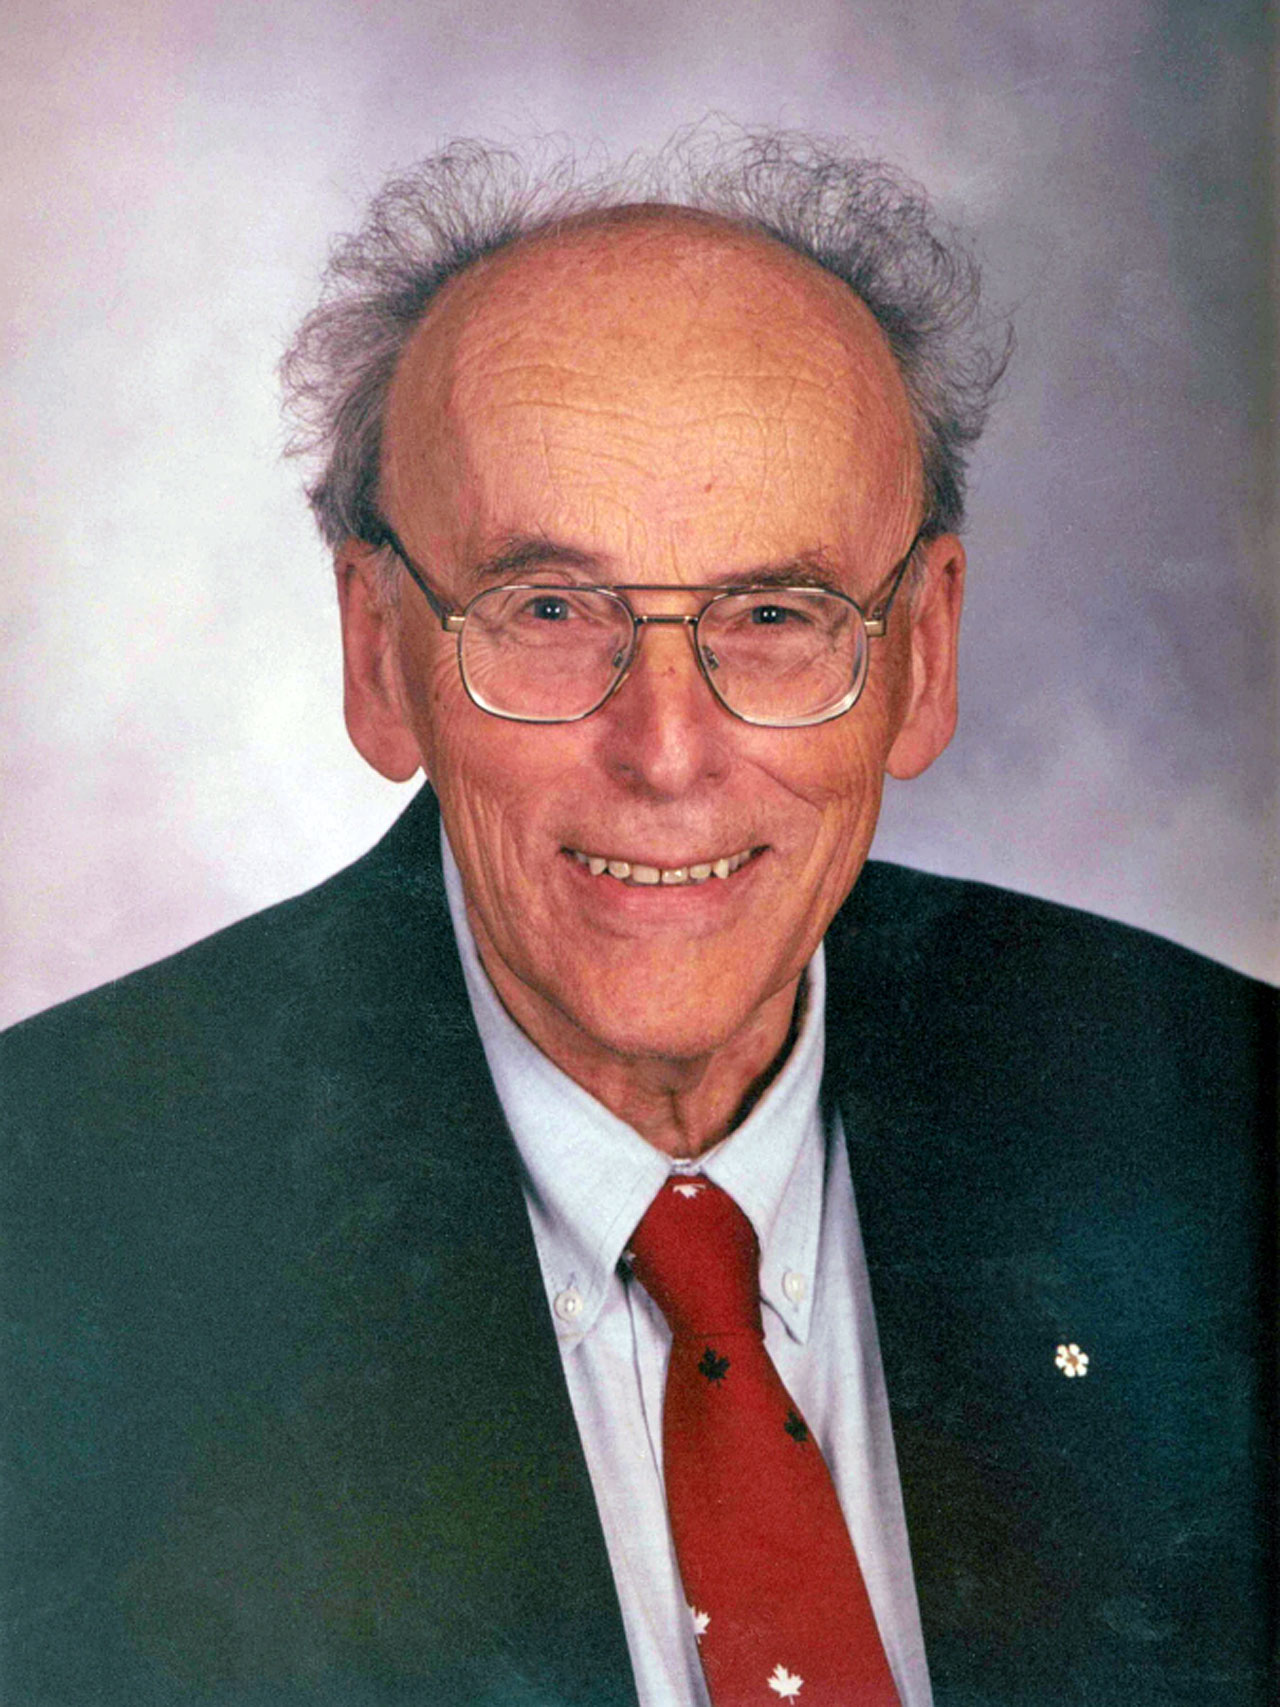 Sidney van den Bergh, recipient of the 2014 Gruber Cosmology Prize